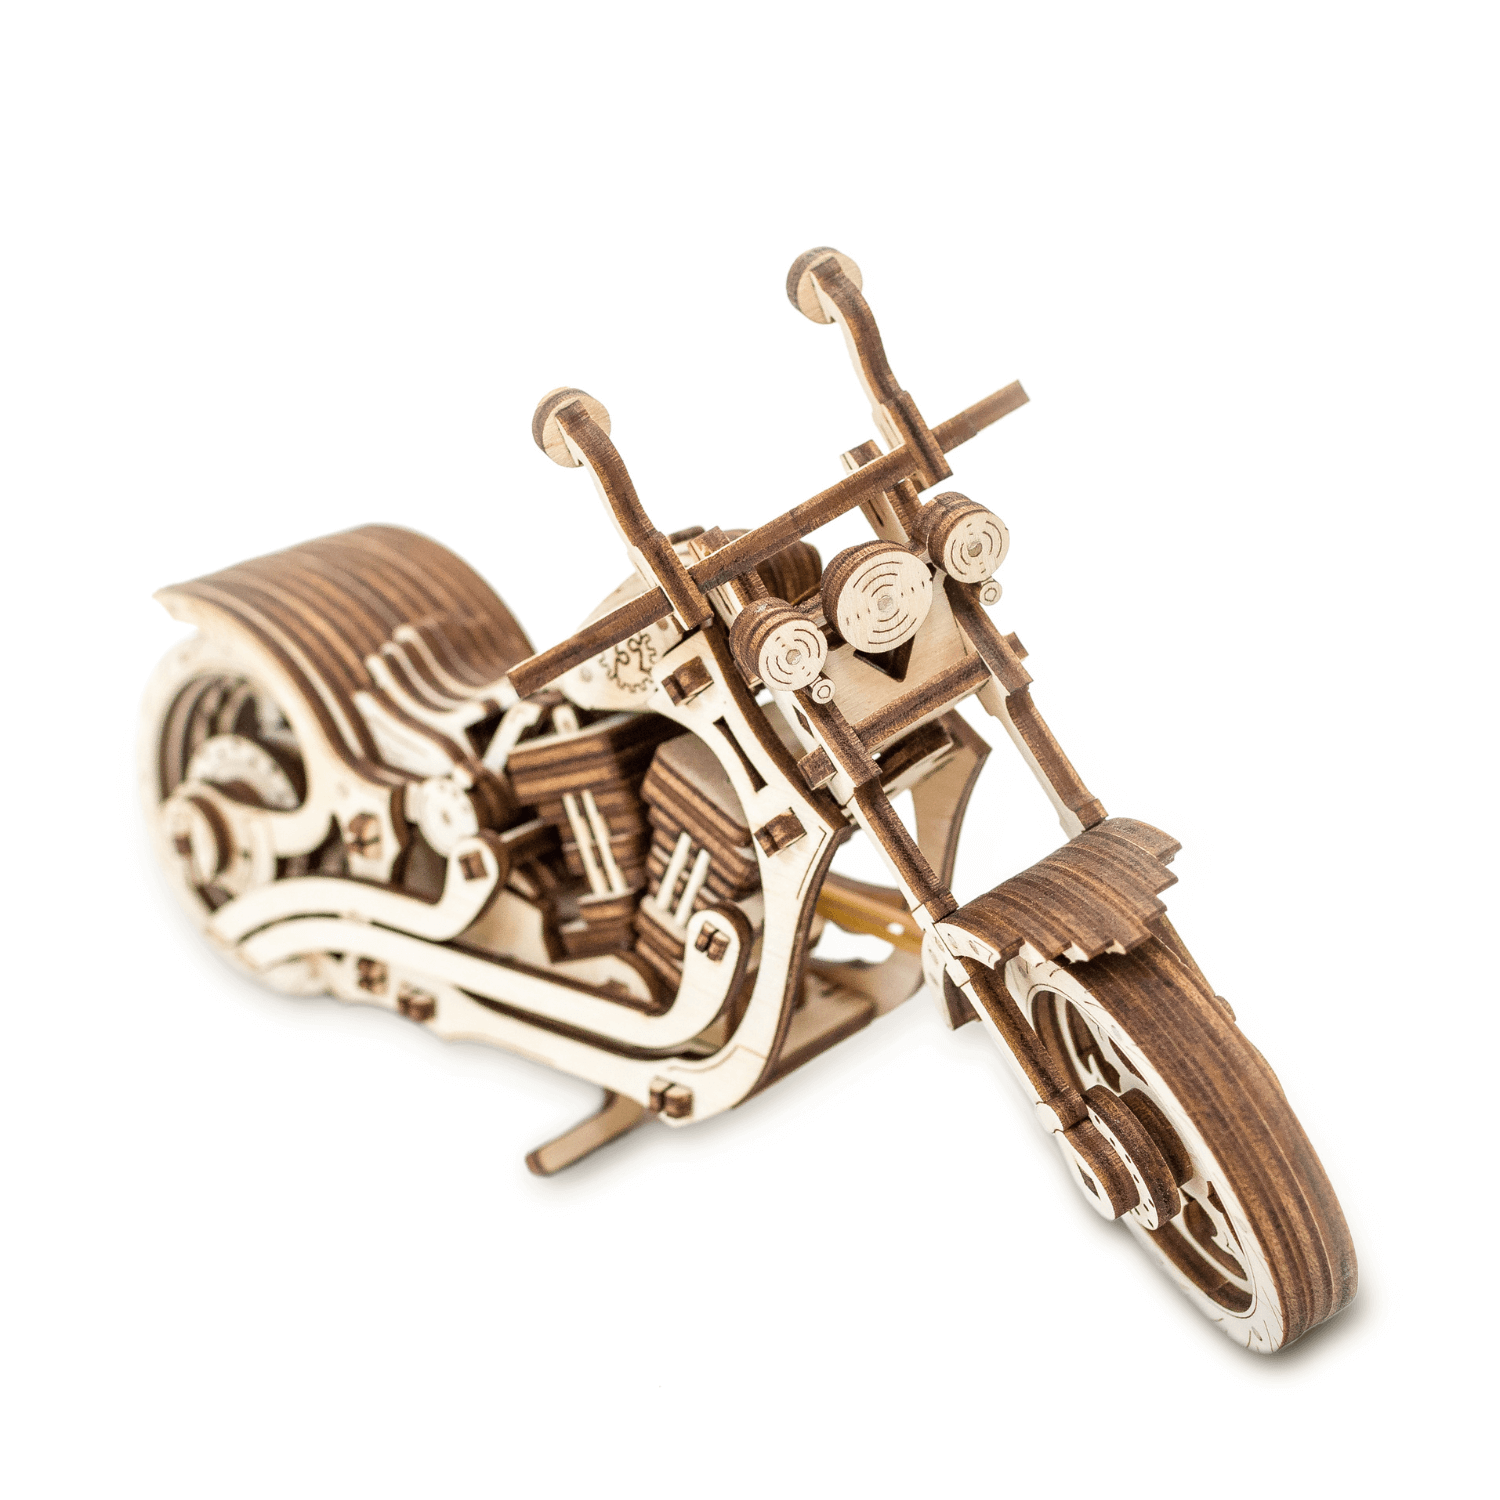 Cruiser | Bike-Mechanisches Holzpuzzle-Eco-Wood-Art--